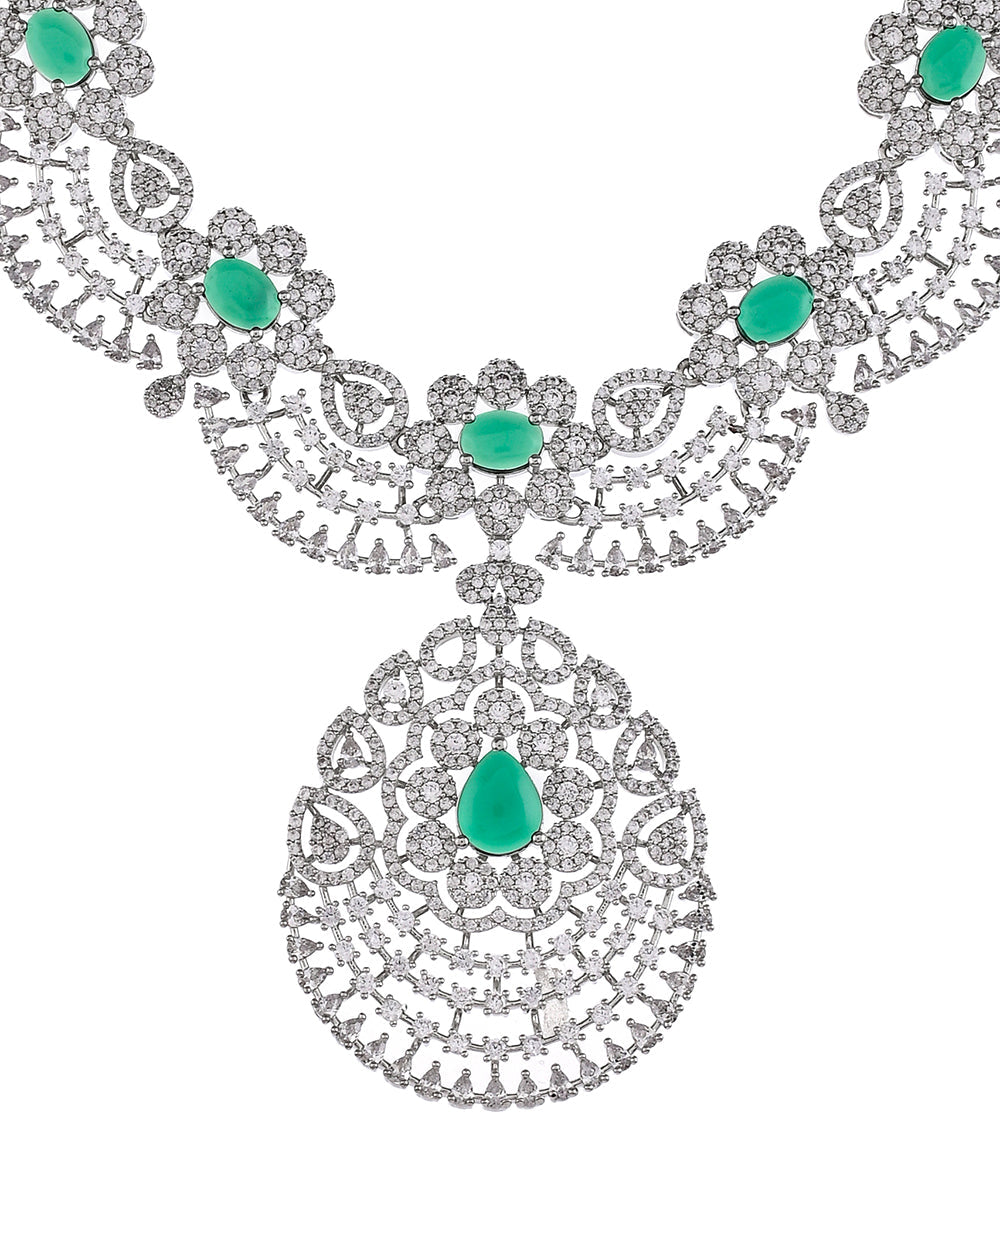 Women's Cz Elegance Jewellery Set With Green Stones - Voylla